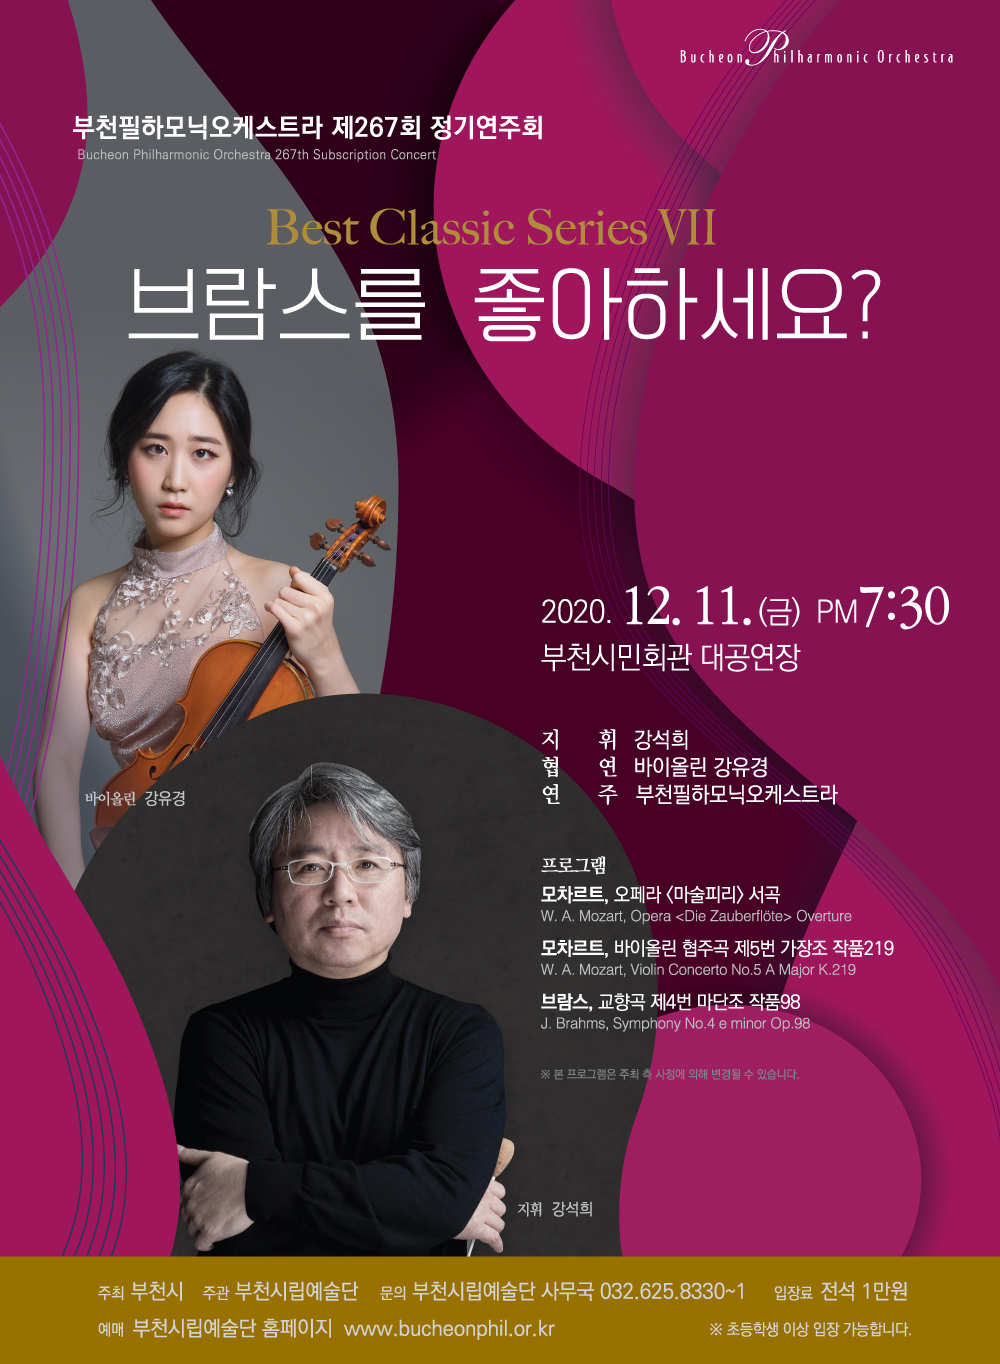  [12.11]Bucheon Philharmonic Orchestra 267th Subscription Concert - Best Classic Series Ⅶ 'Brahms, Symphony No.4'